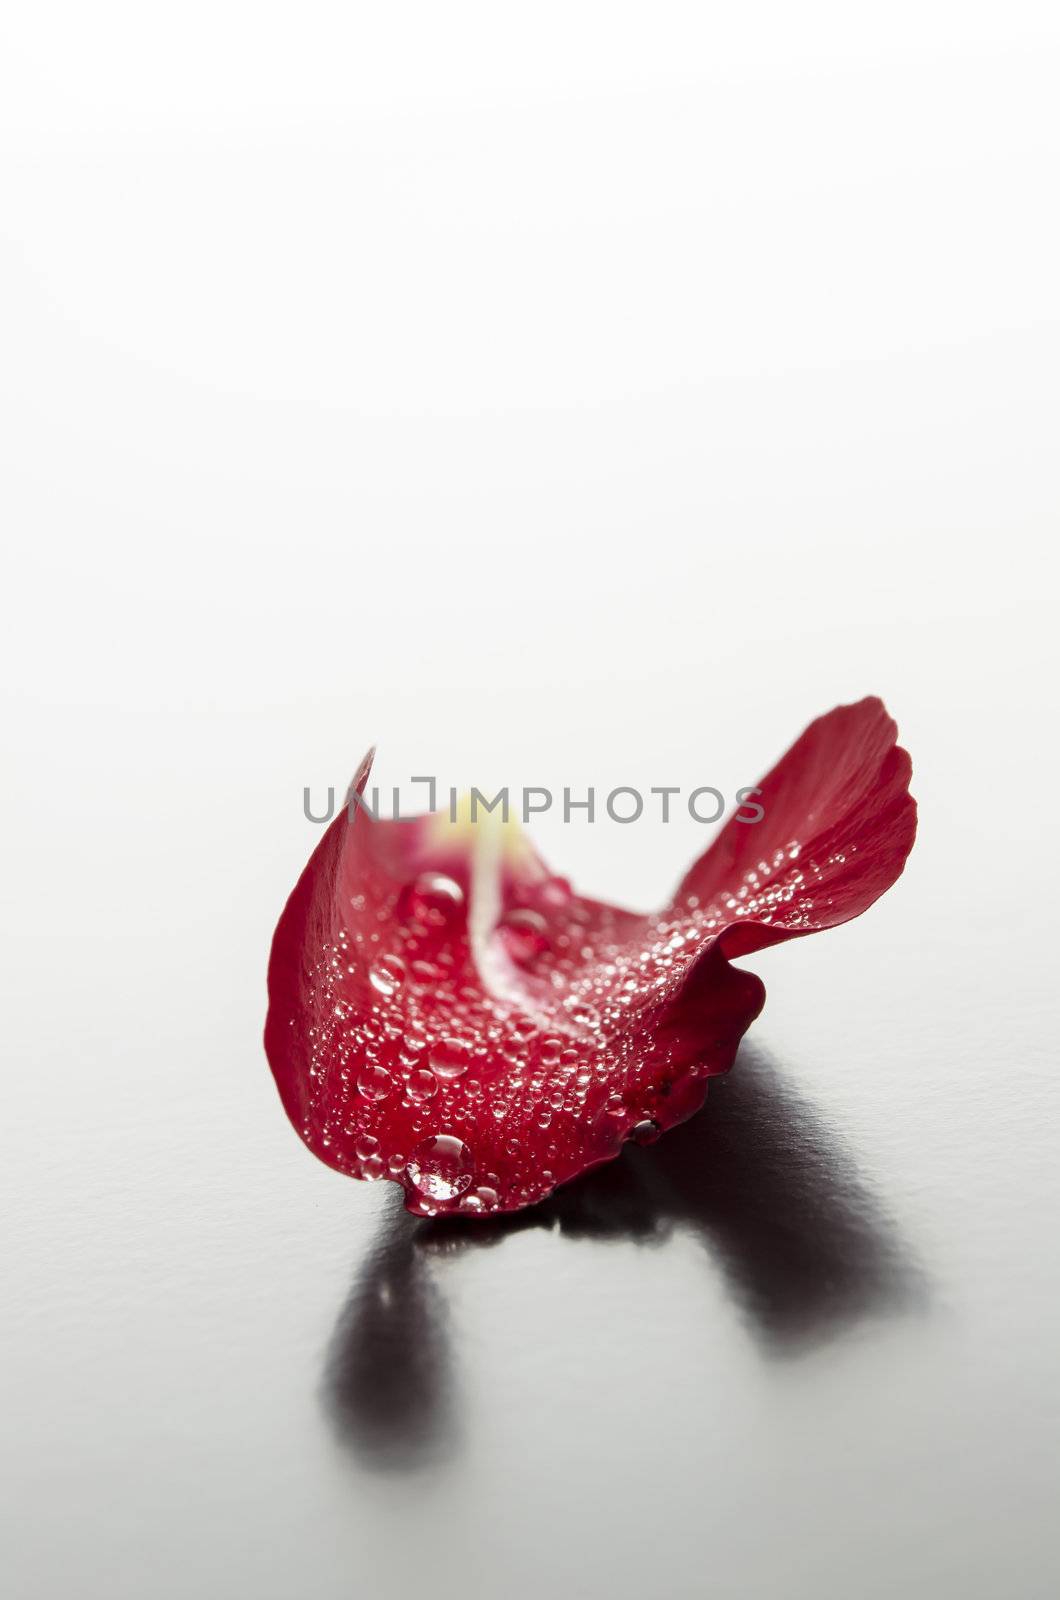 Red rose petal by Gajus